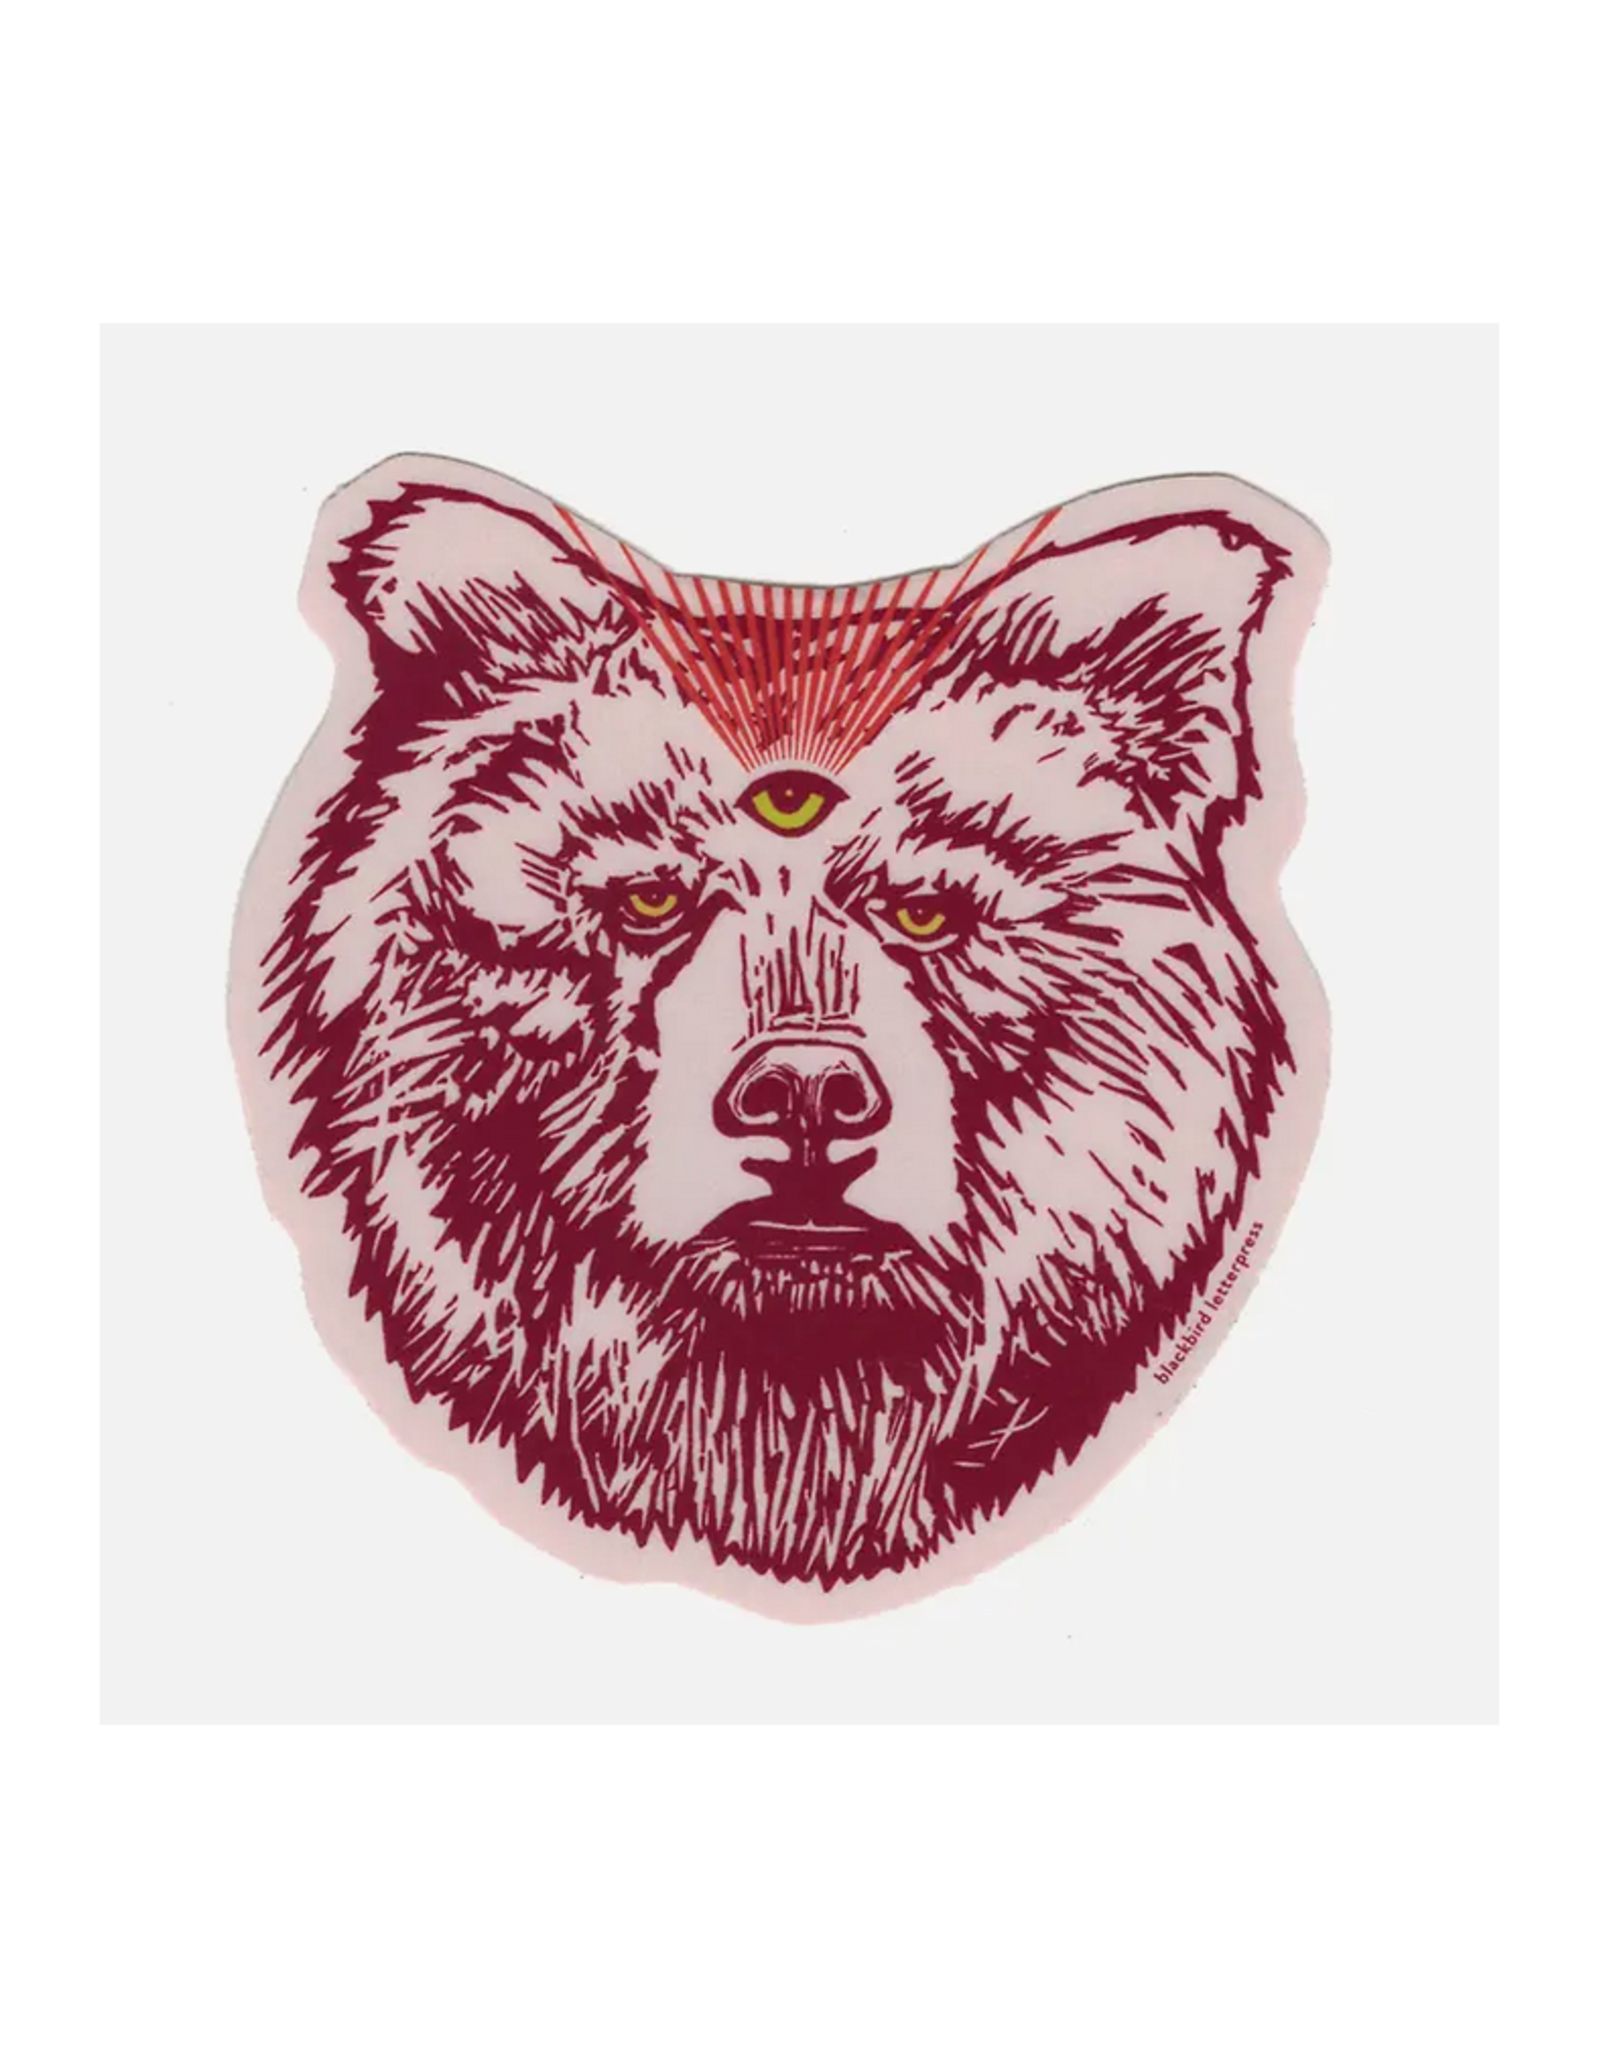 Third Eye Grizzly Bear Sticker